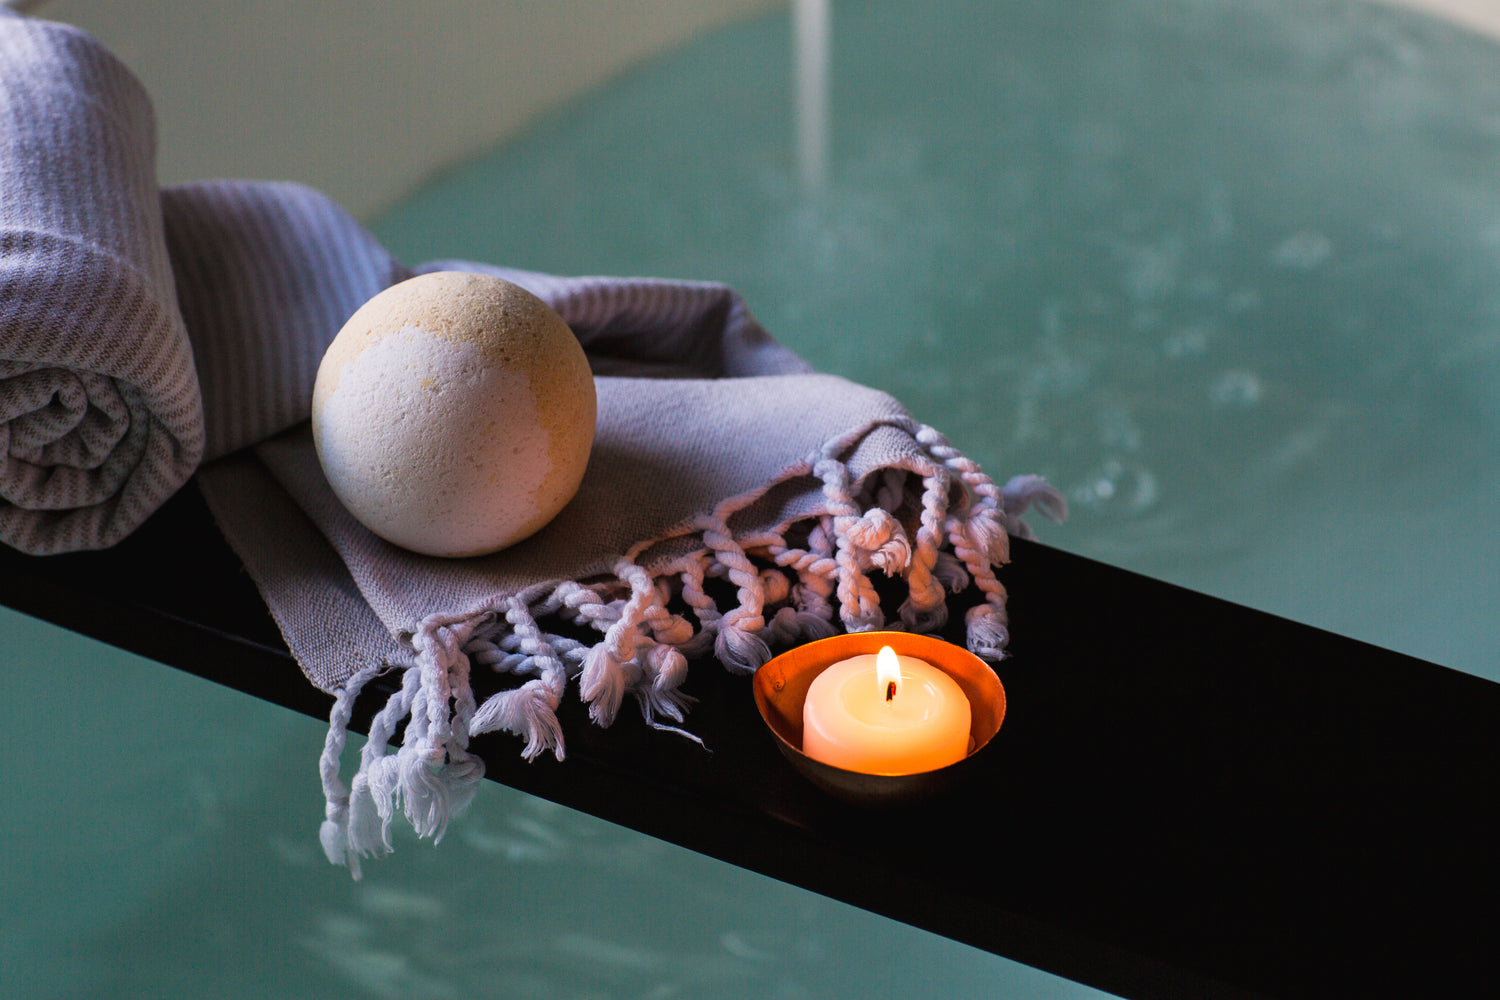 Bath bomb and candle resting on a bathtub plank